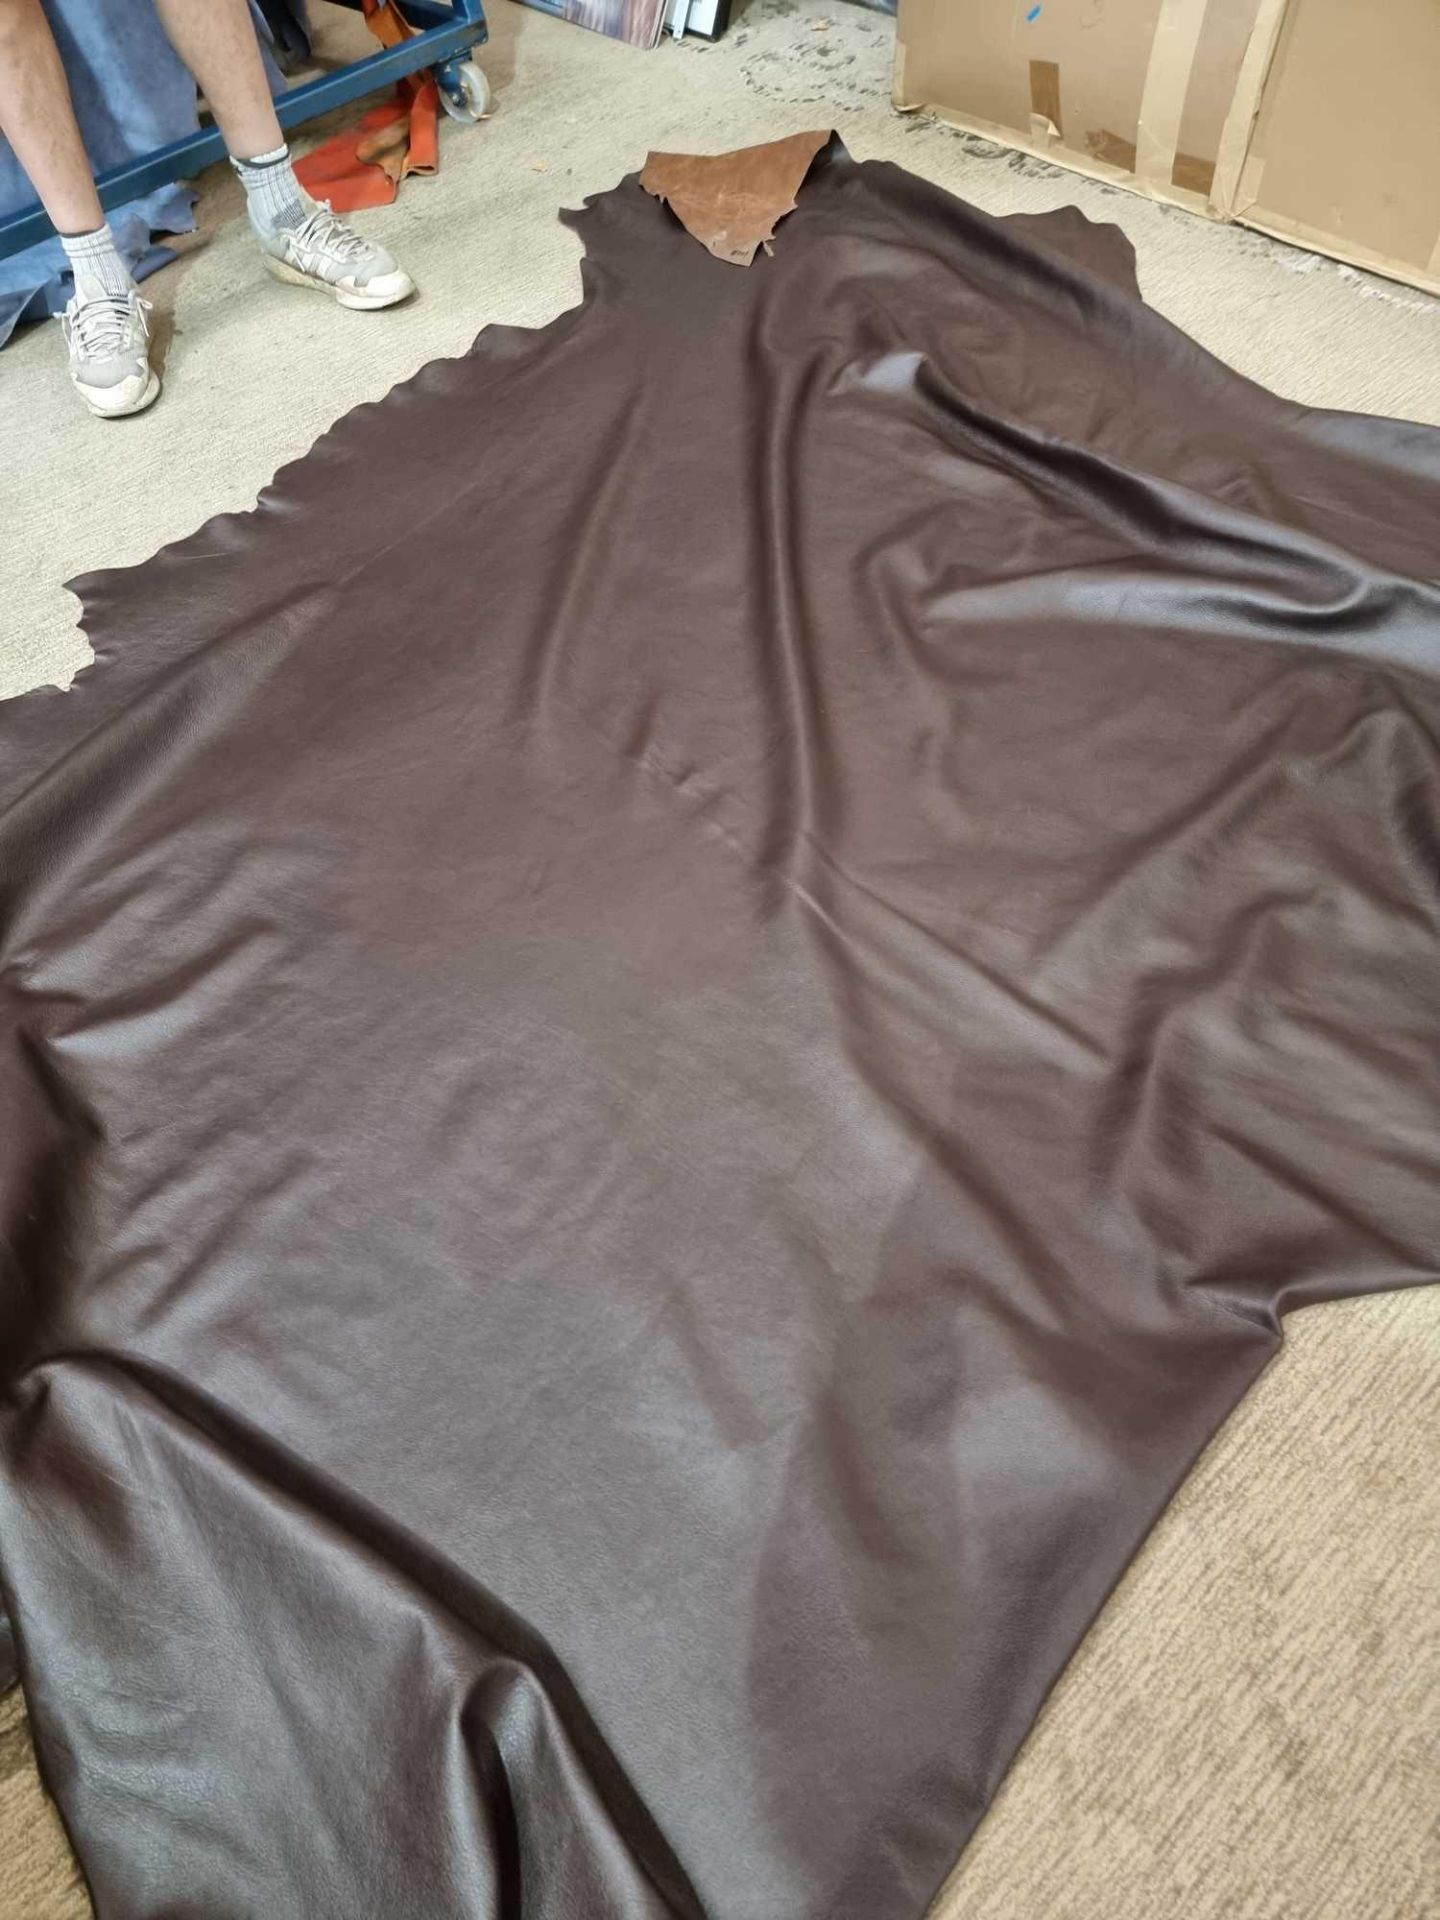 Mastrotto Mustang Bourneville Leather Hide approximately 3 96M2 2 2 x 1 8cm ( Hide No,148) - Bild 3 aus 3